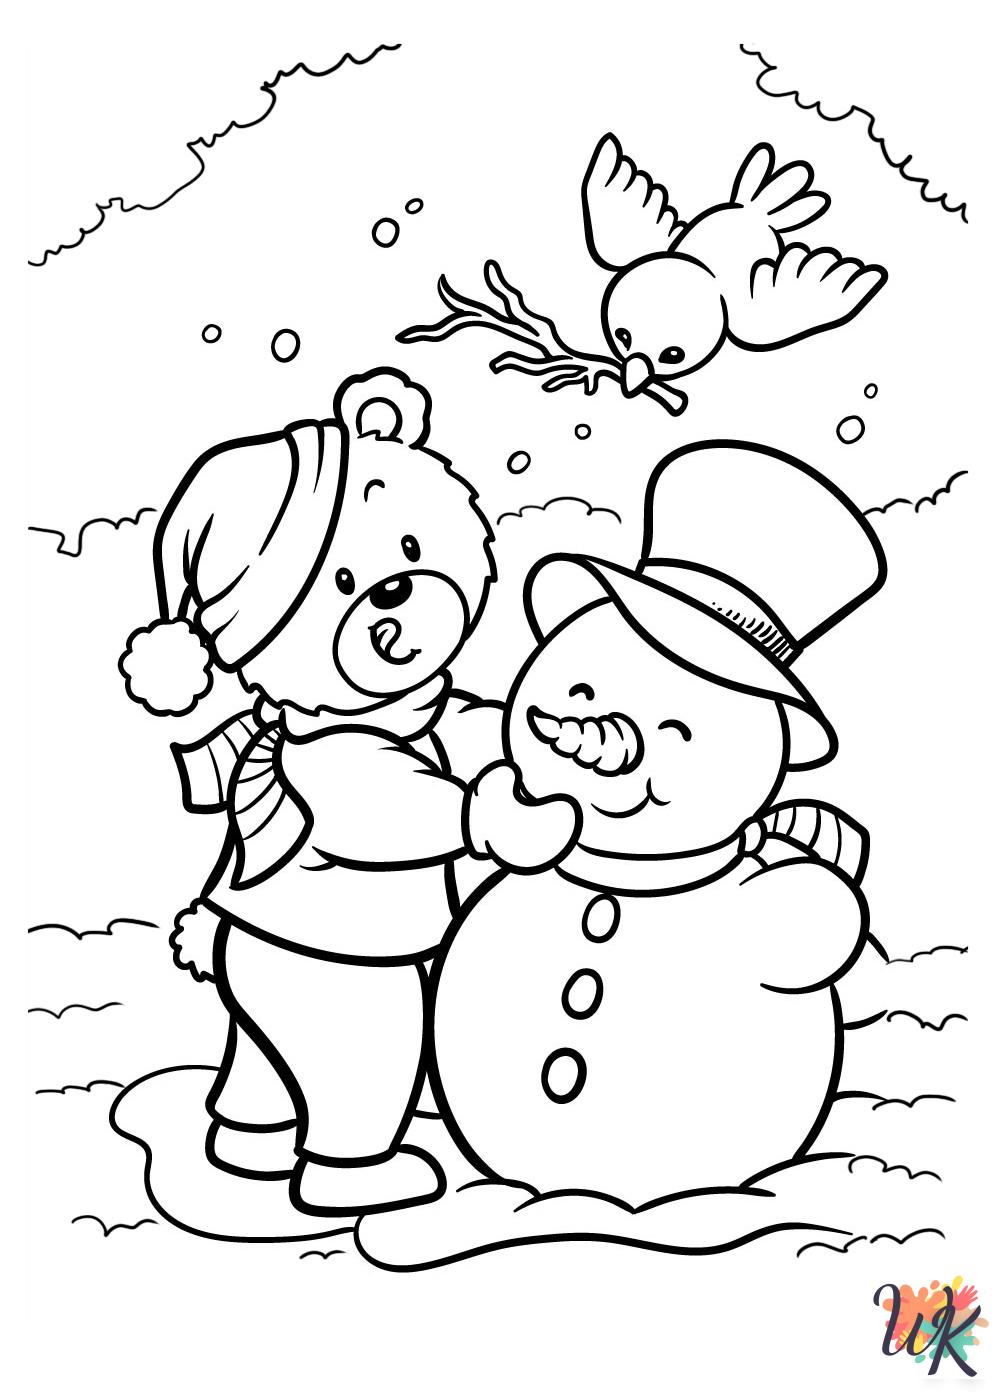 Snowman ornaments coloring pages